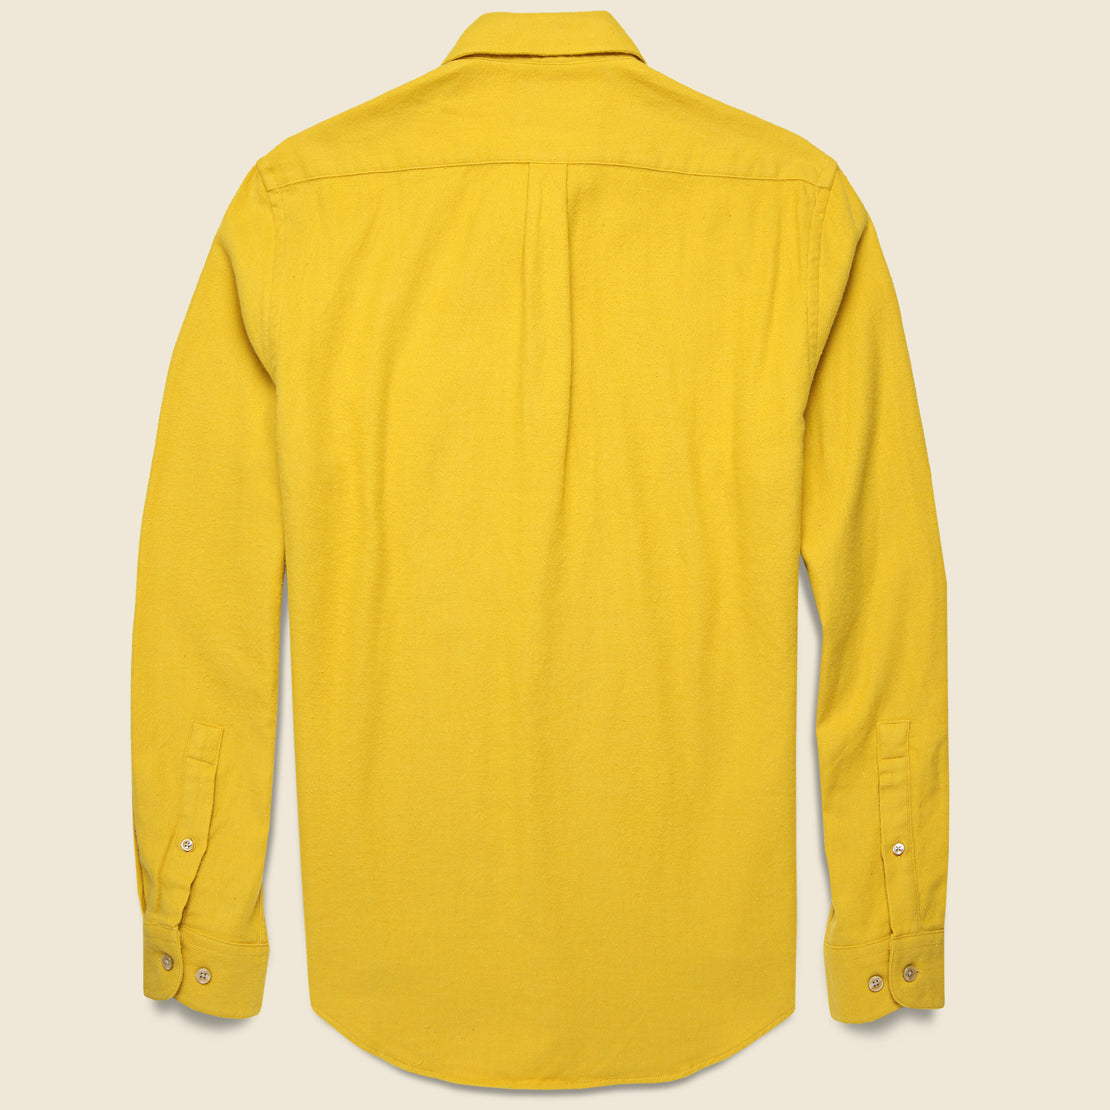 Teca Solid Flannel - Mustard - Portuguese Flannel - STAG Provisions - Tops - L/S Woven - Solid